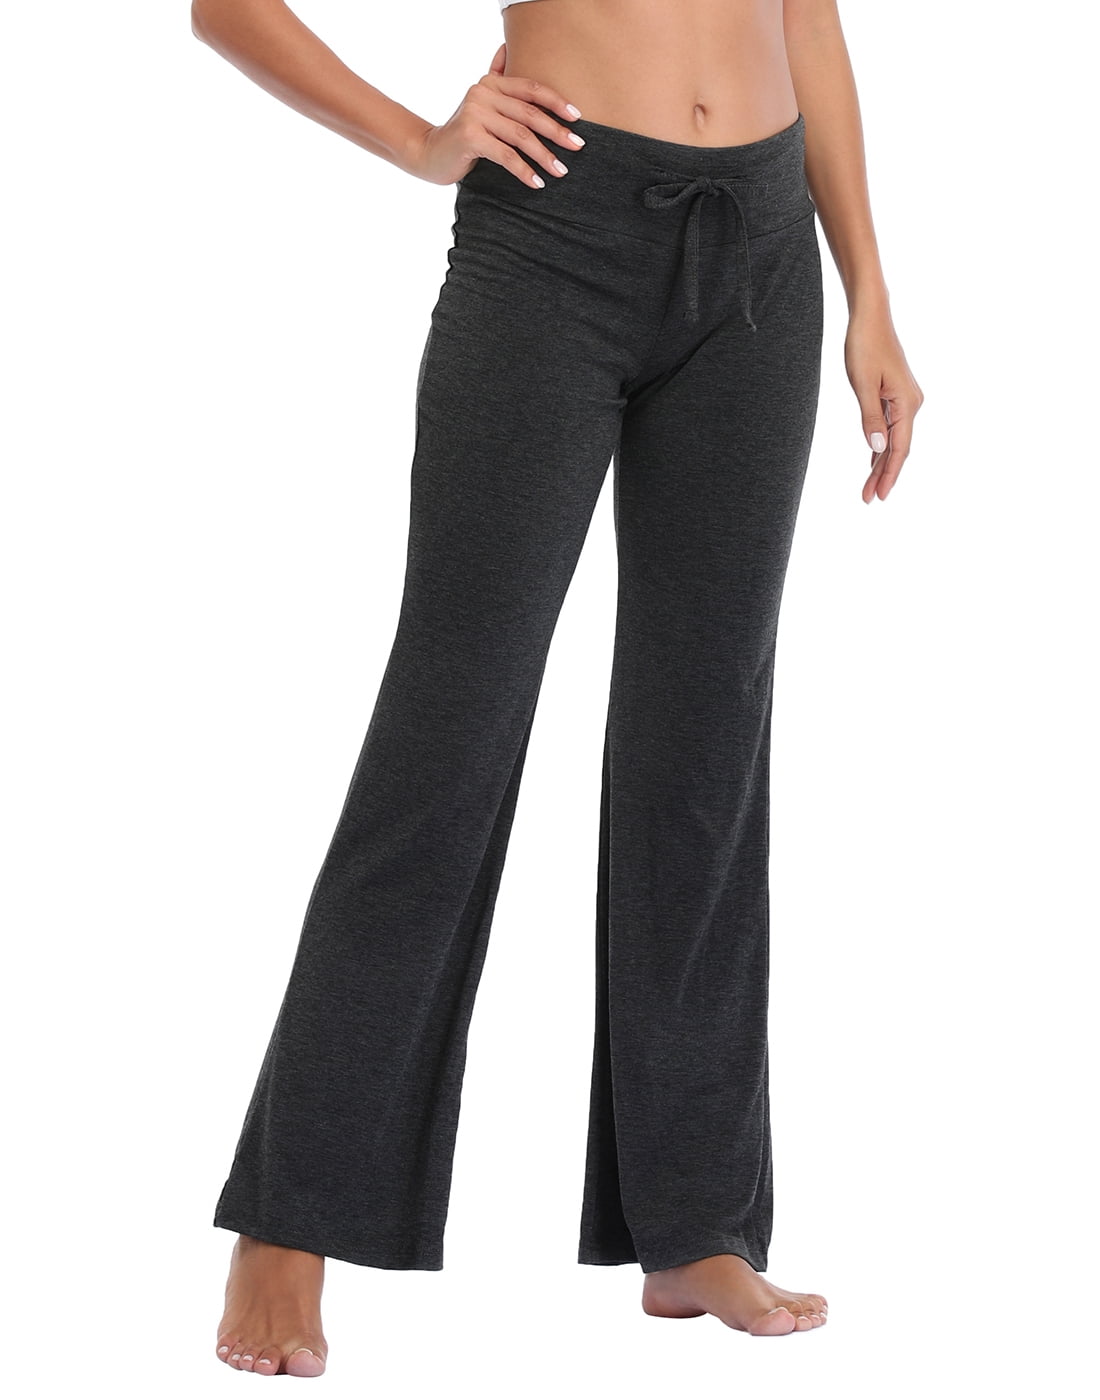 HDE Pajama Pants for Women PJ Pants Comfy Loungewear Charcoal 1X Plus